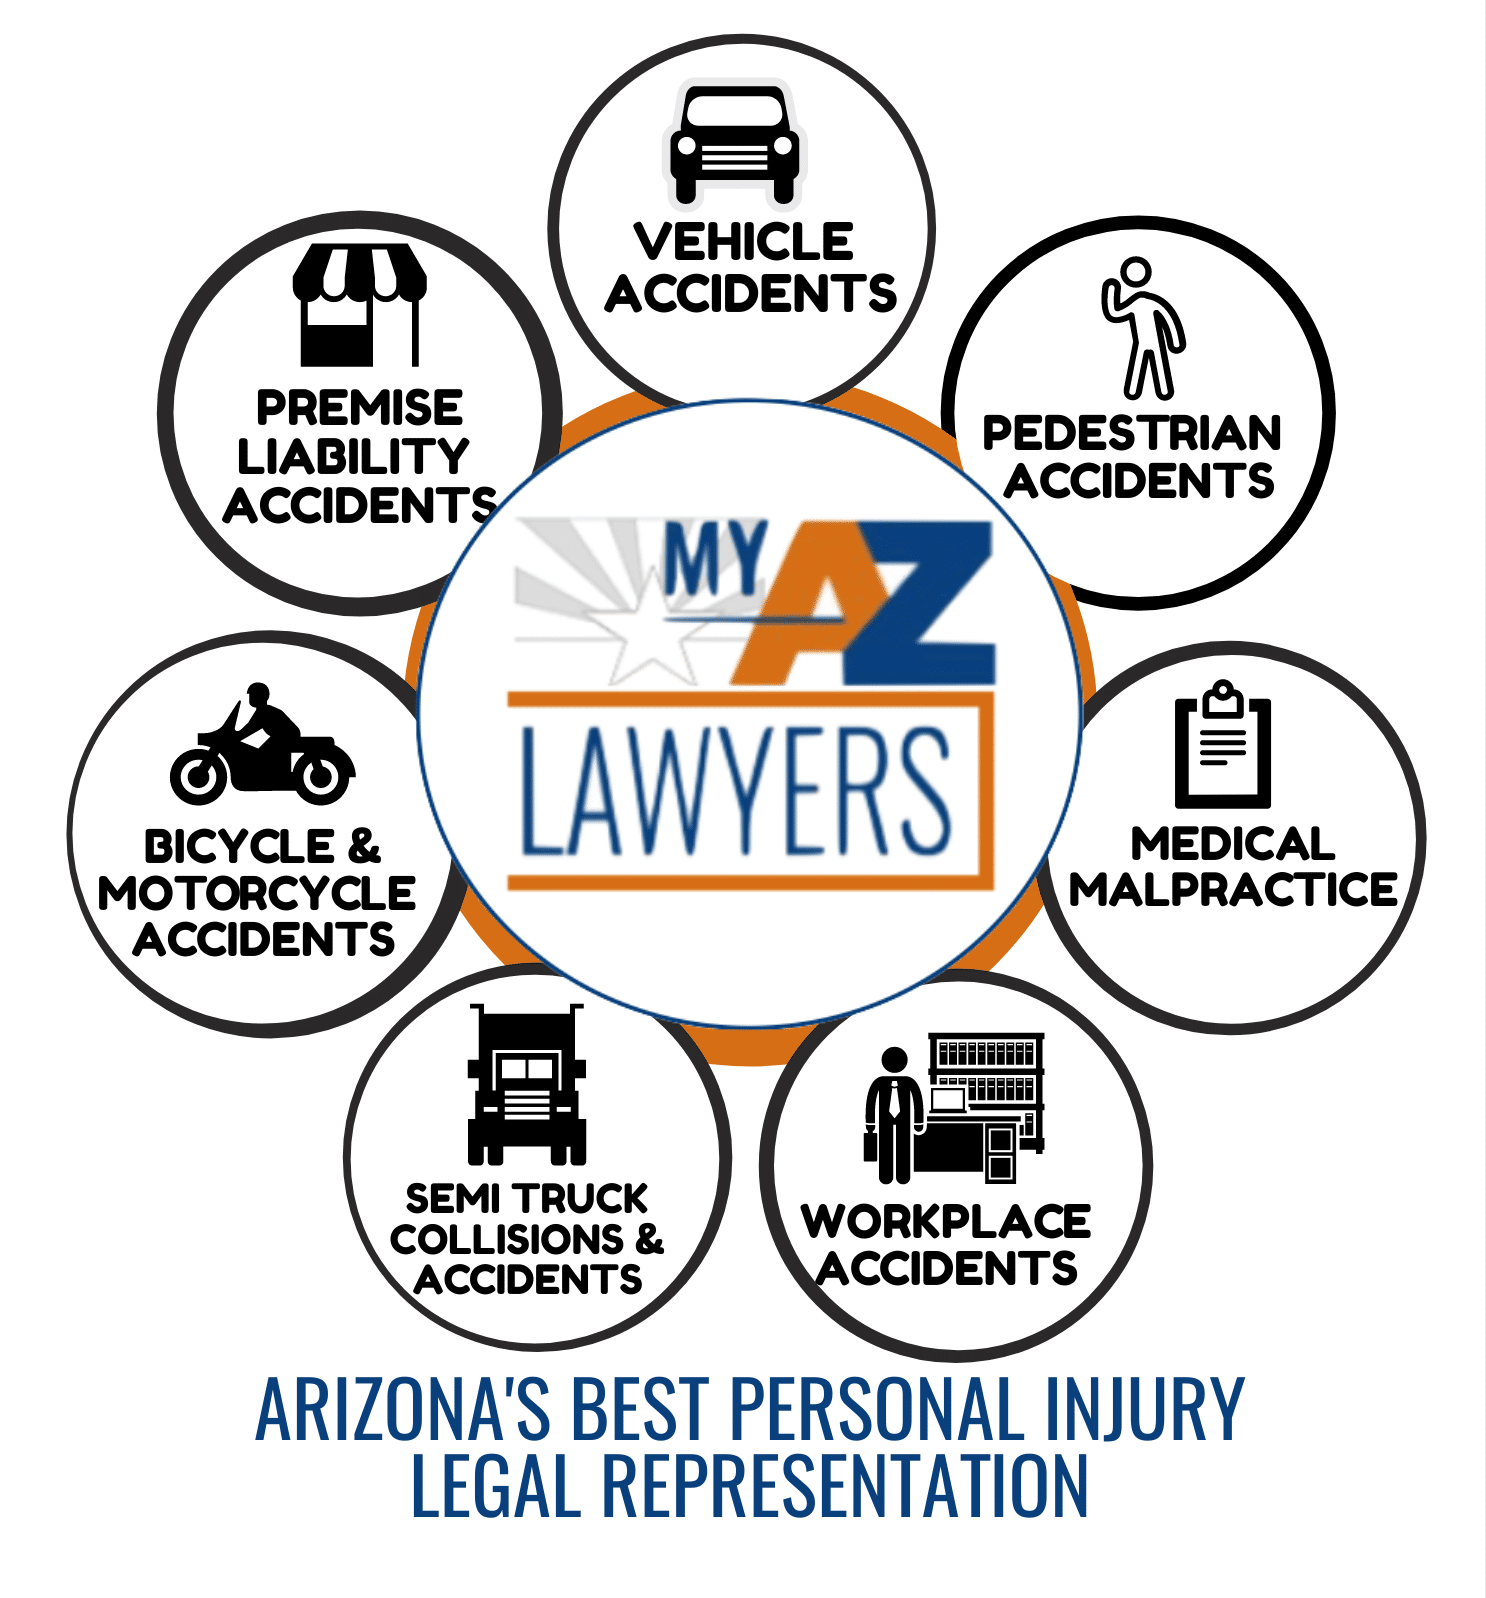 Arizona personal injury attorney services infographic